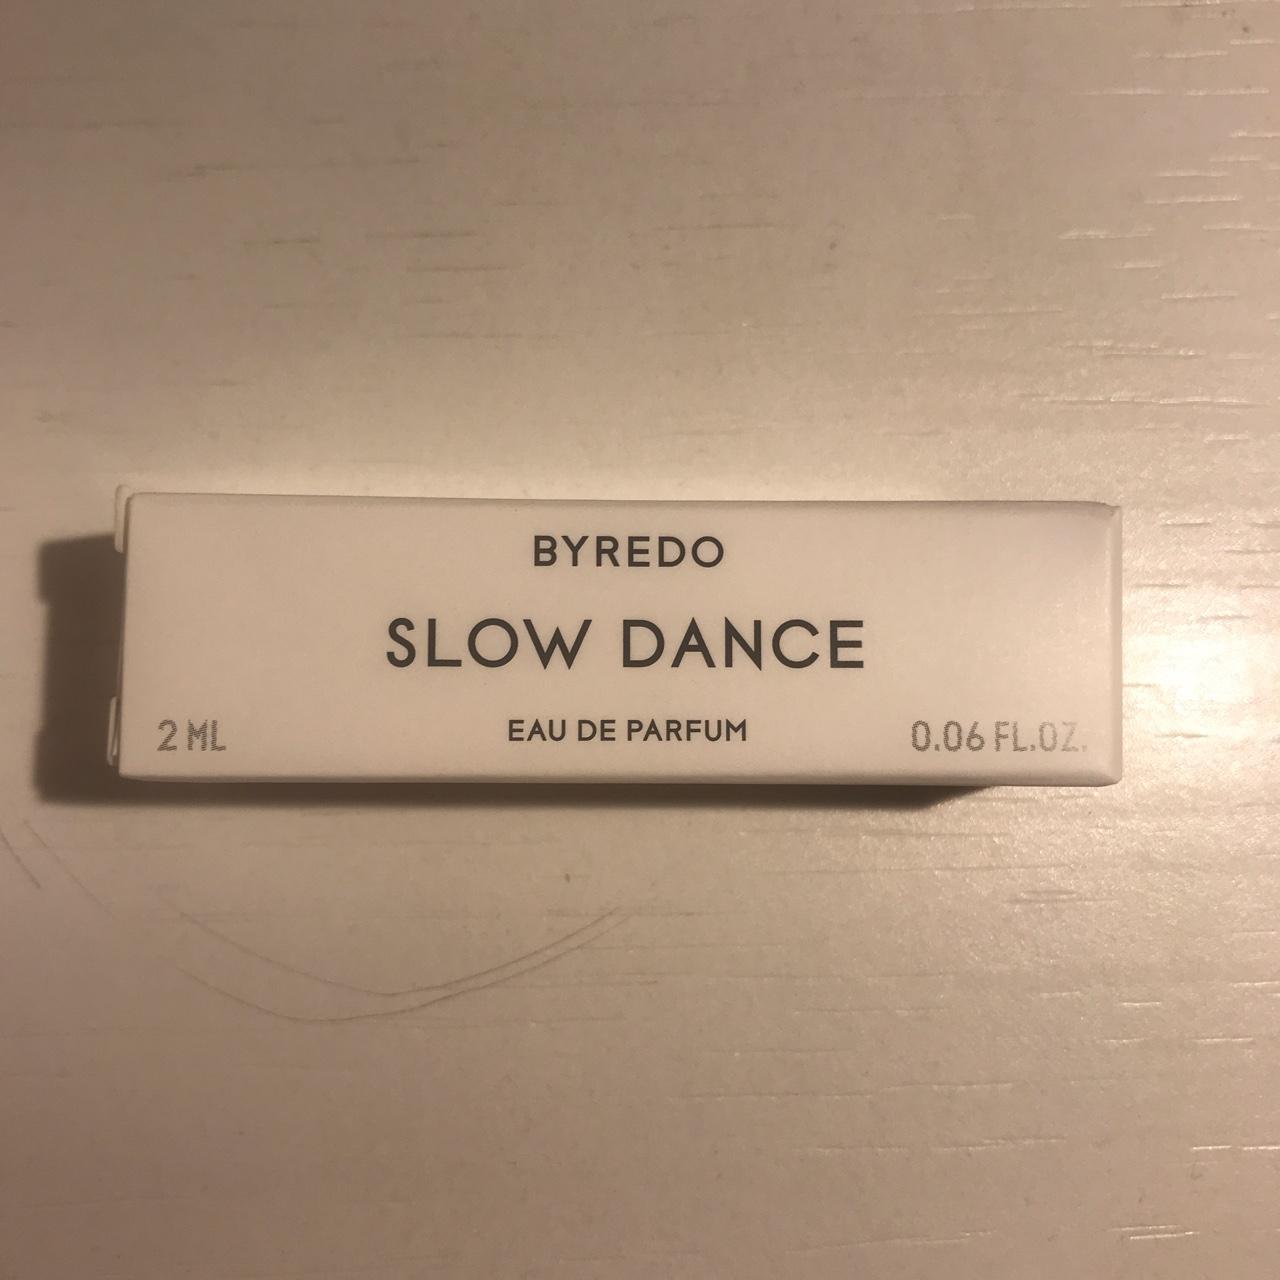 Product Image 1 - Slow dance
Byredo 
Bundle pink’n’mix 3